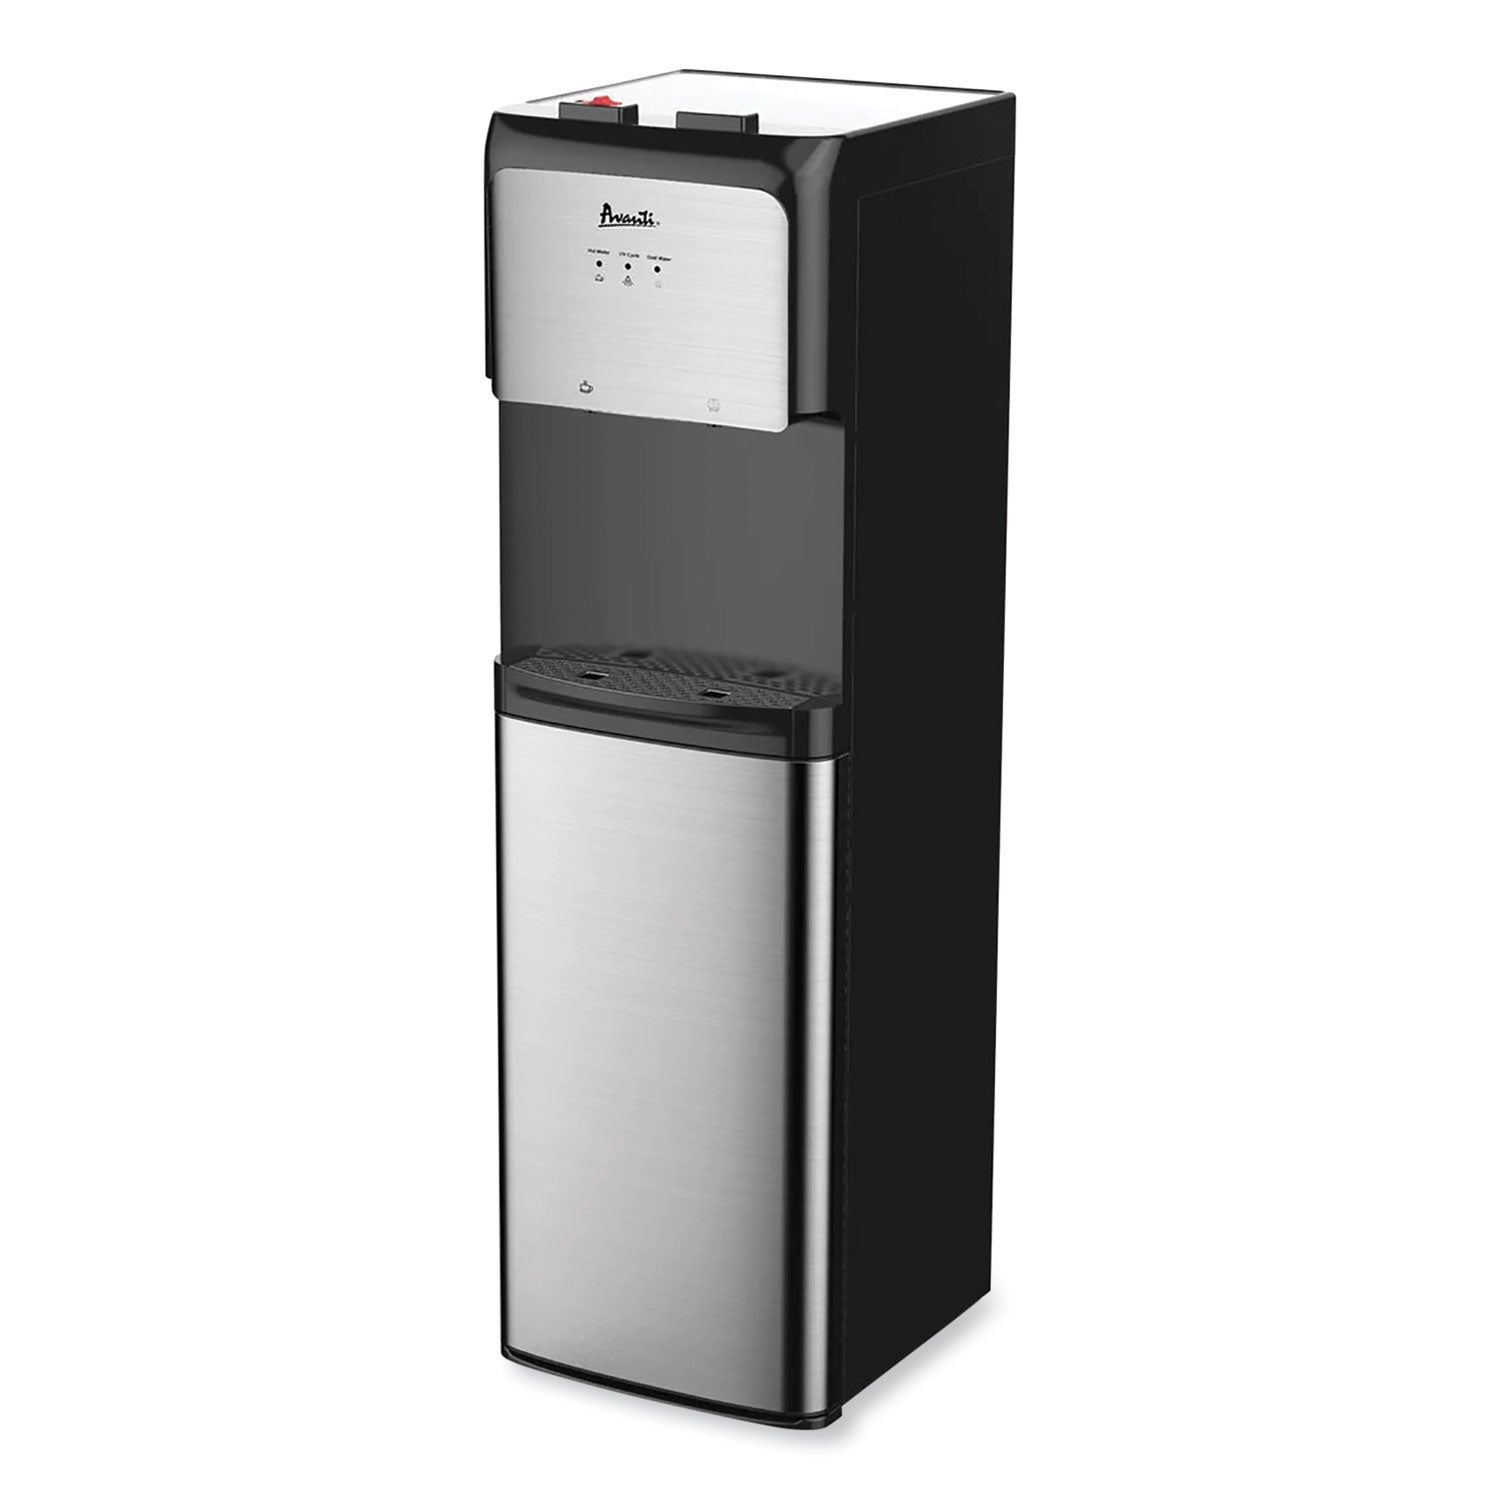 bottom-loading-water-dispenser-with-uv-light-3-to-5-gal-4125-h-black-stainless-steel_avawdbmc810q3s - 3